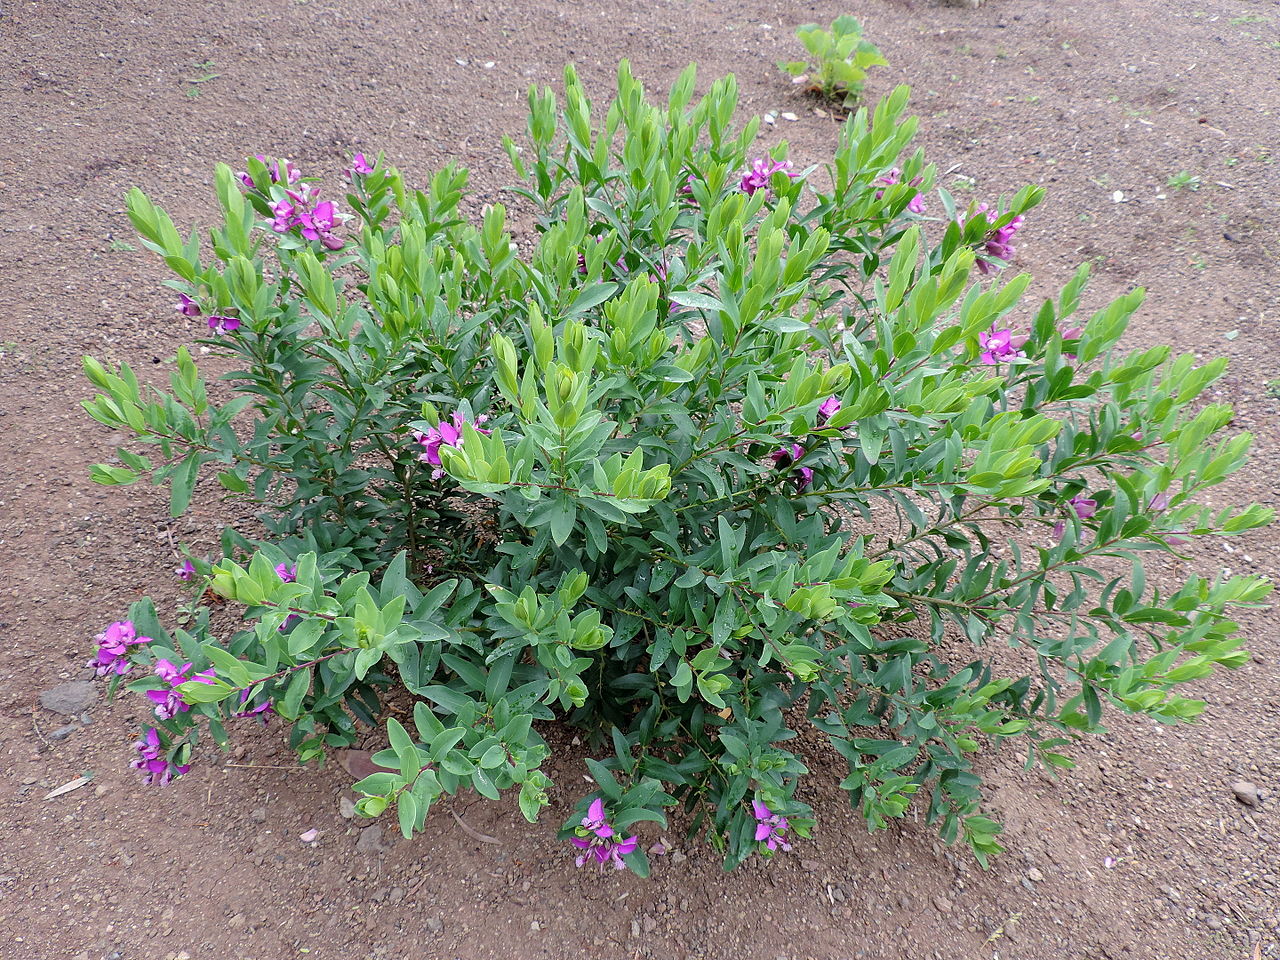 Polygala is a perennial shrub